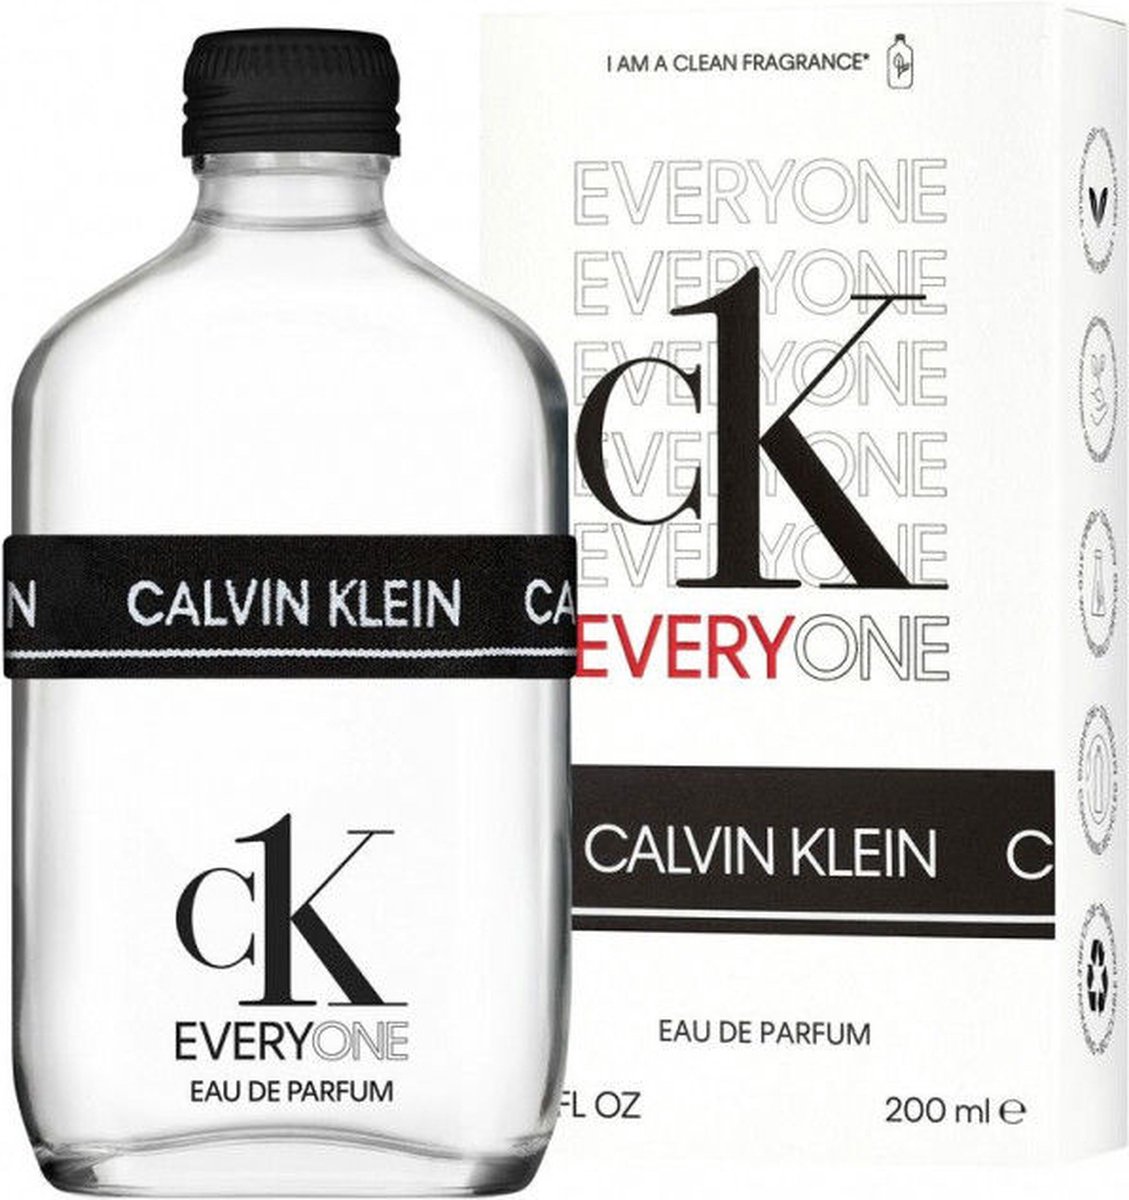 Calvin Klein CK Everyone - 200 ml - eau de parfum spray - unisexparfum